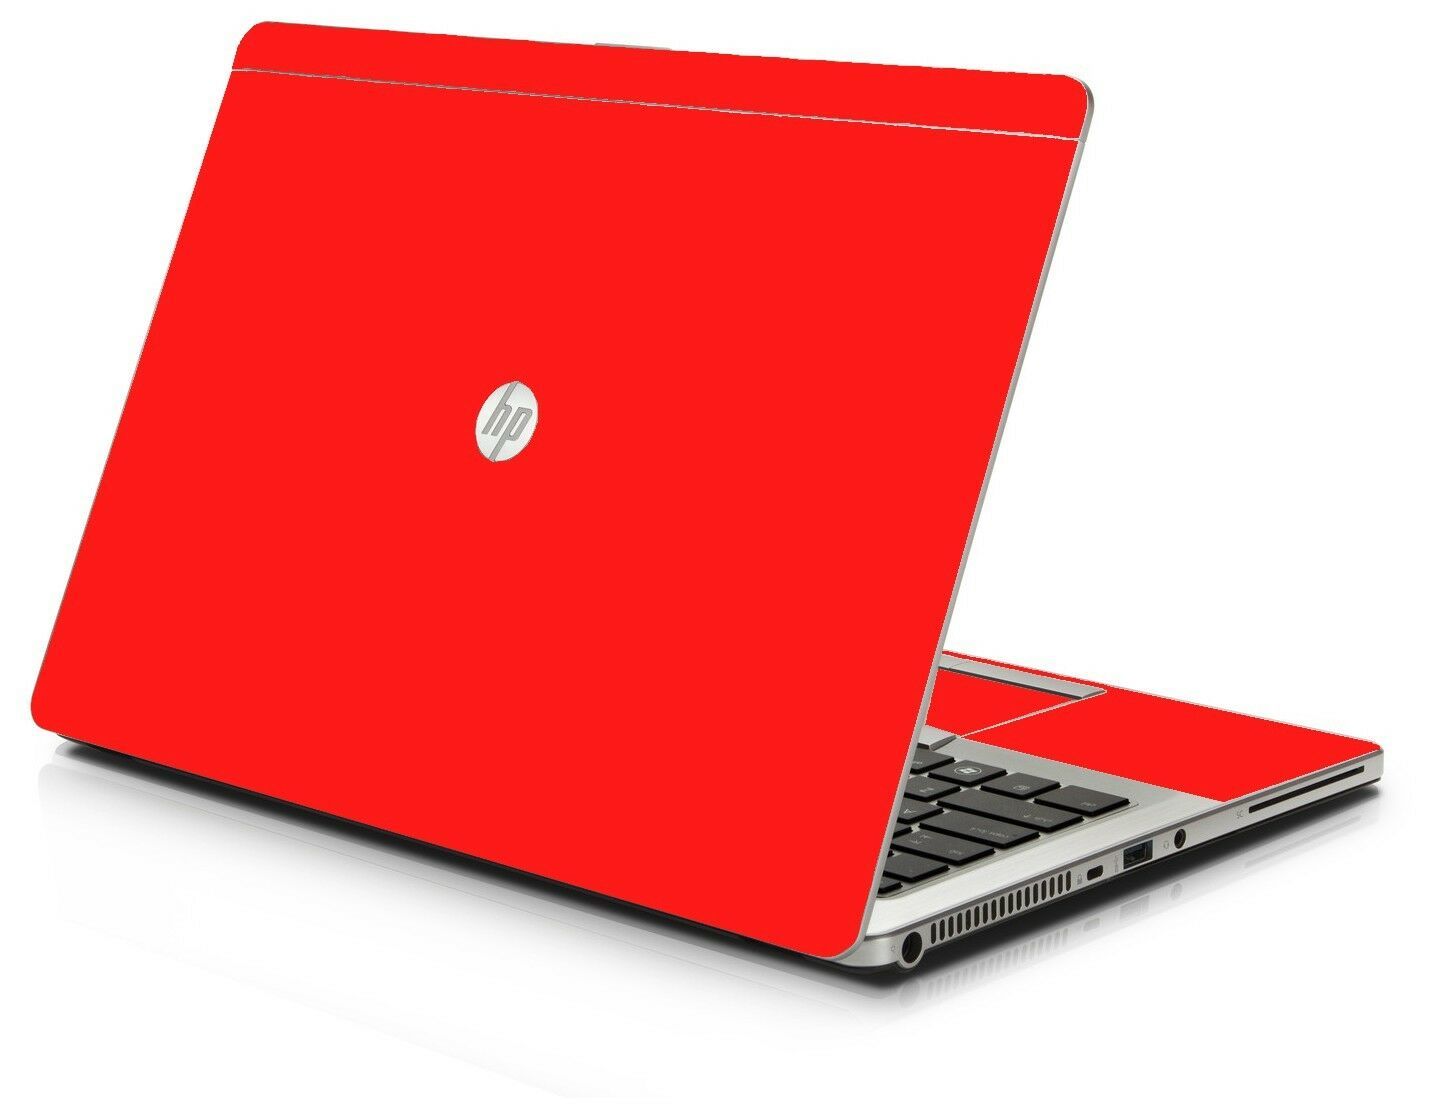 Primary image for LidStyles Standard Colors Laptop Skin Protector HP EliteBook Folio 9470m / 9480M